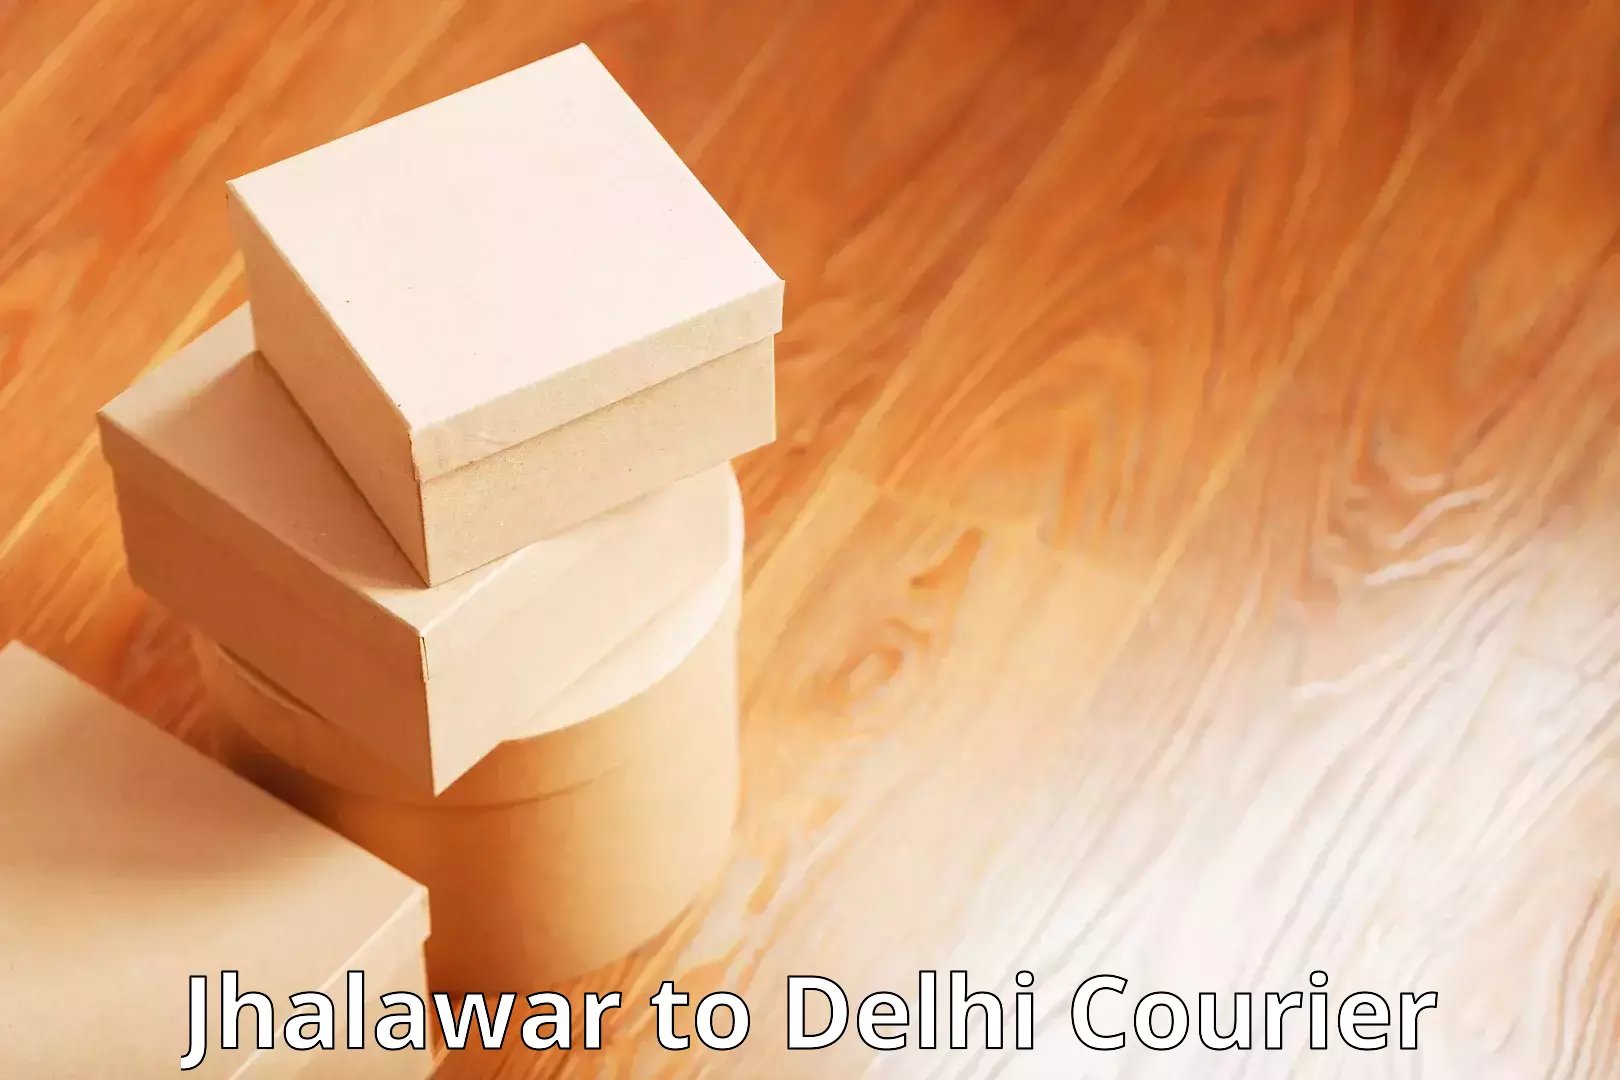 Professional courier handling Jhalawar to East Delhi